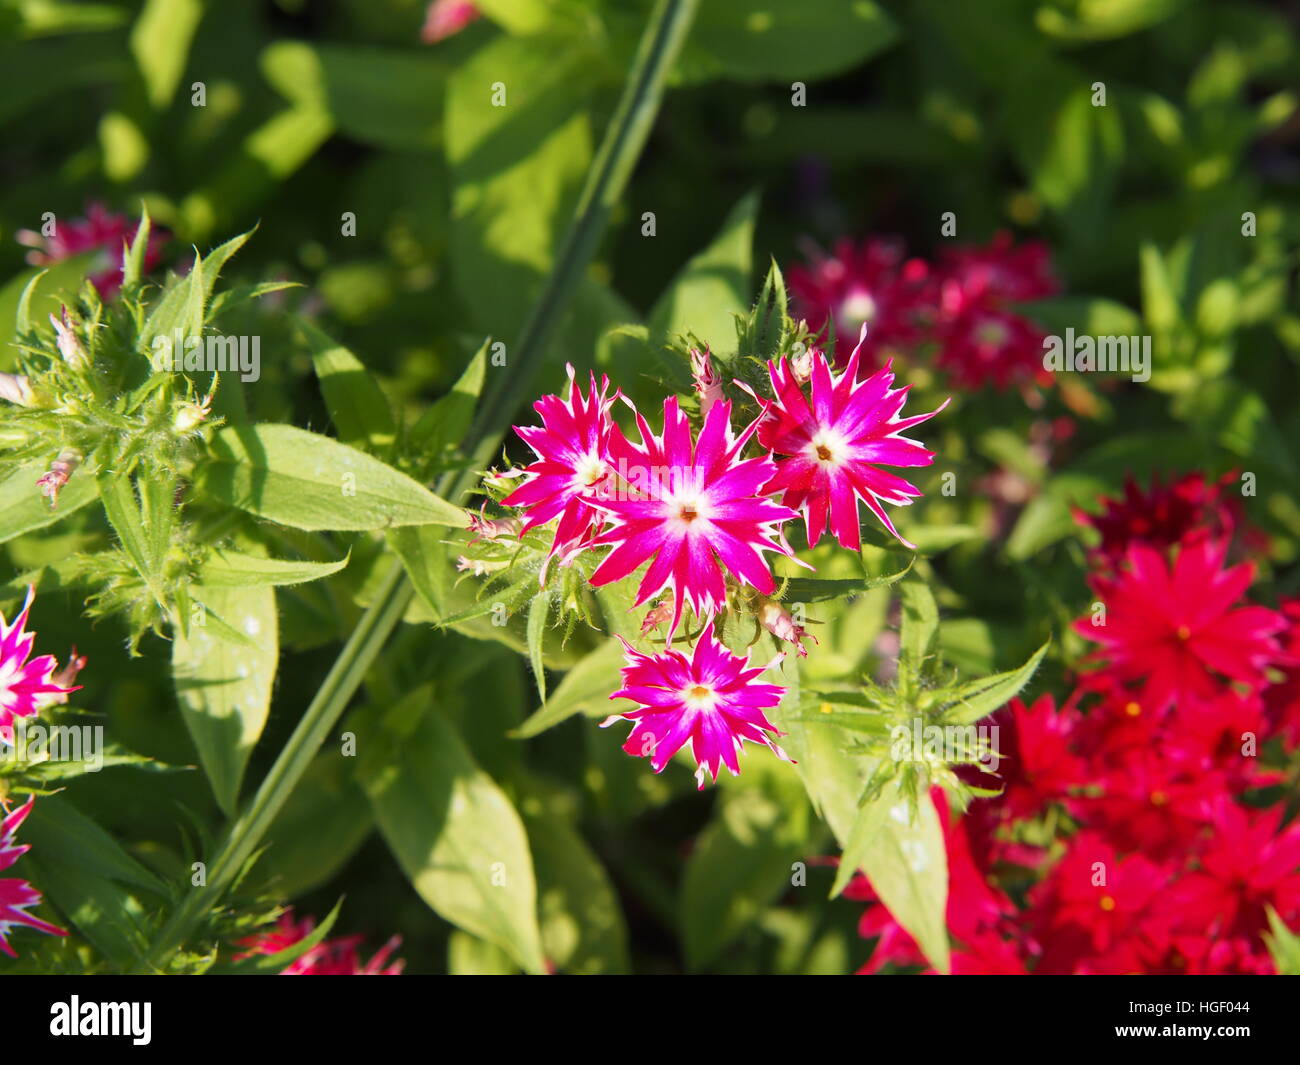 Phlox drummondii 'Twinkle Star' blooming in the garden Stock Photo